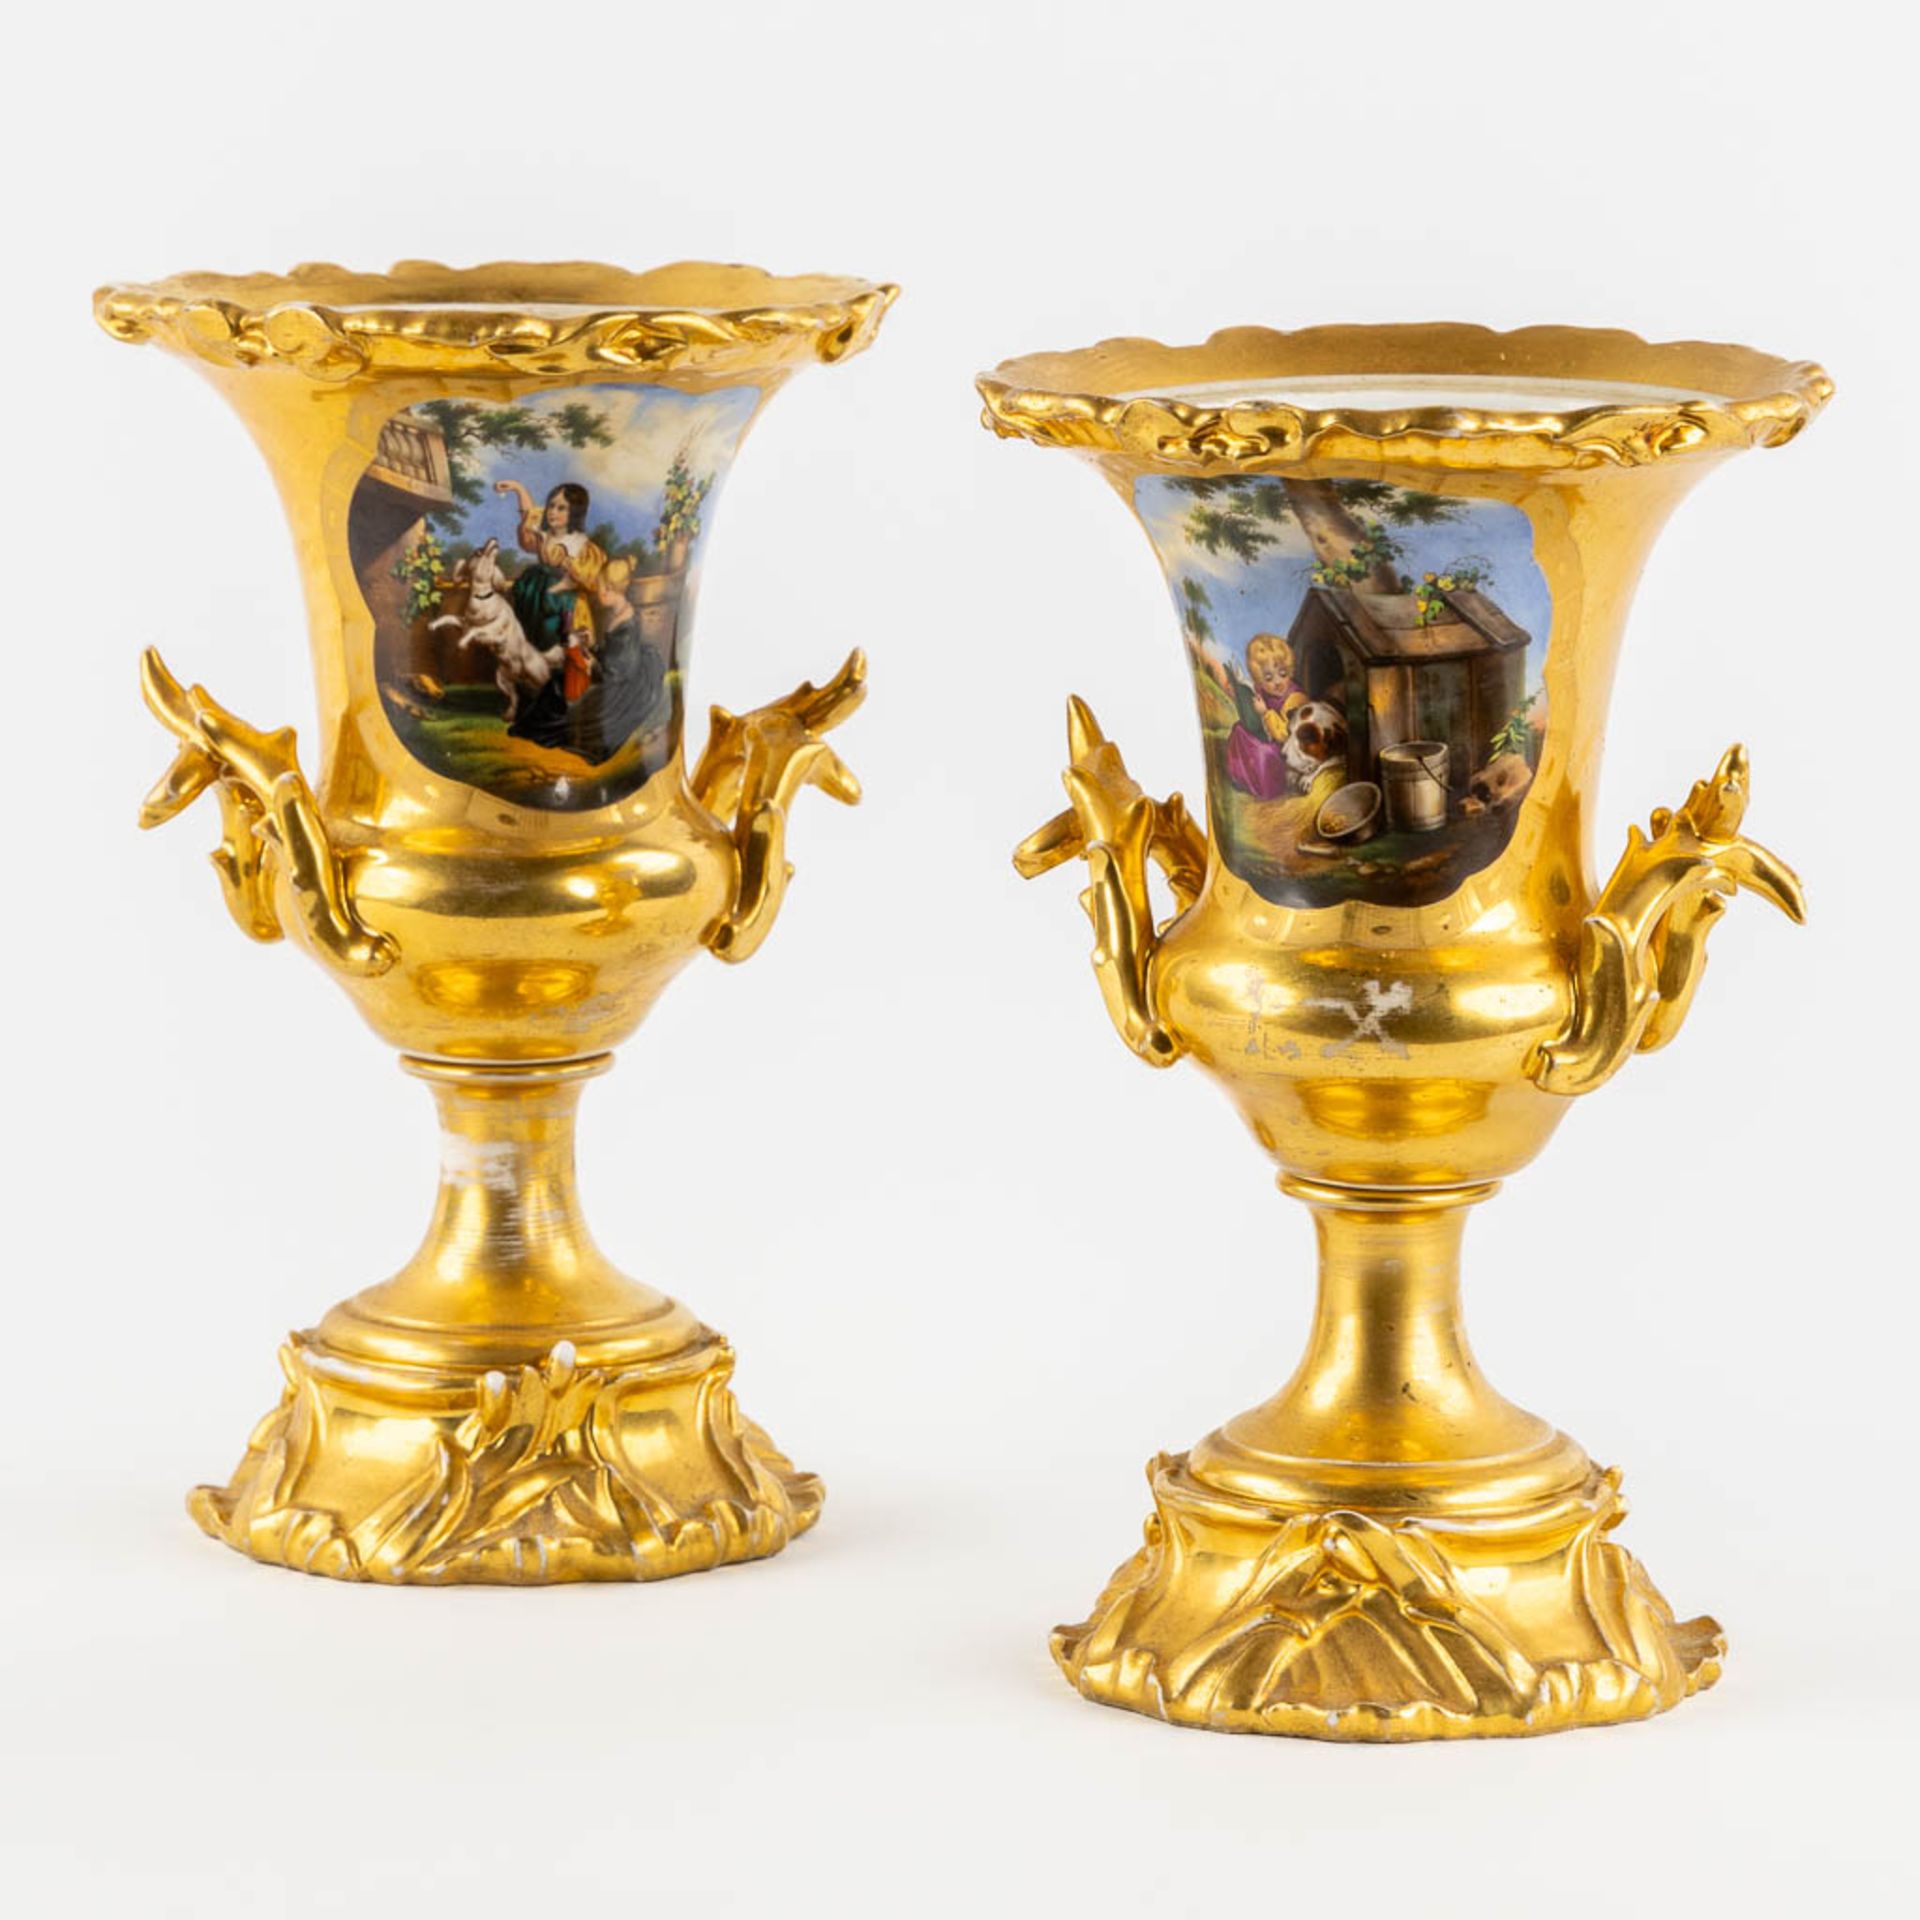 A pair of urns, Old Paris porcelain, hand-painted and gilt decor. 19th C. (H:27 x D:18 cm)